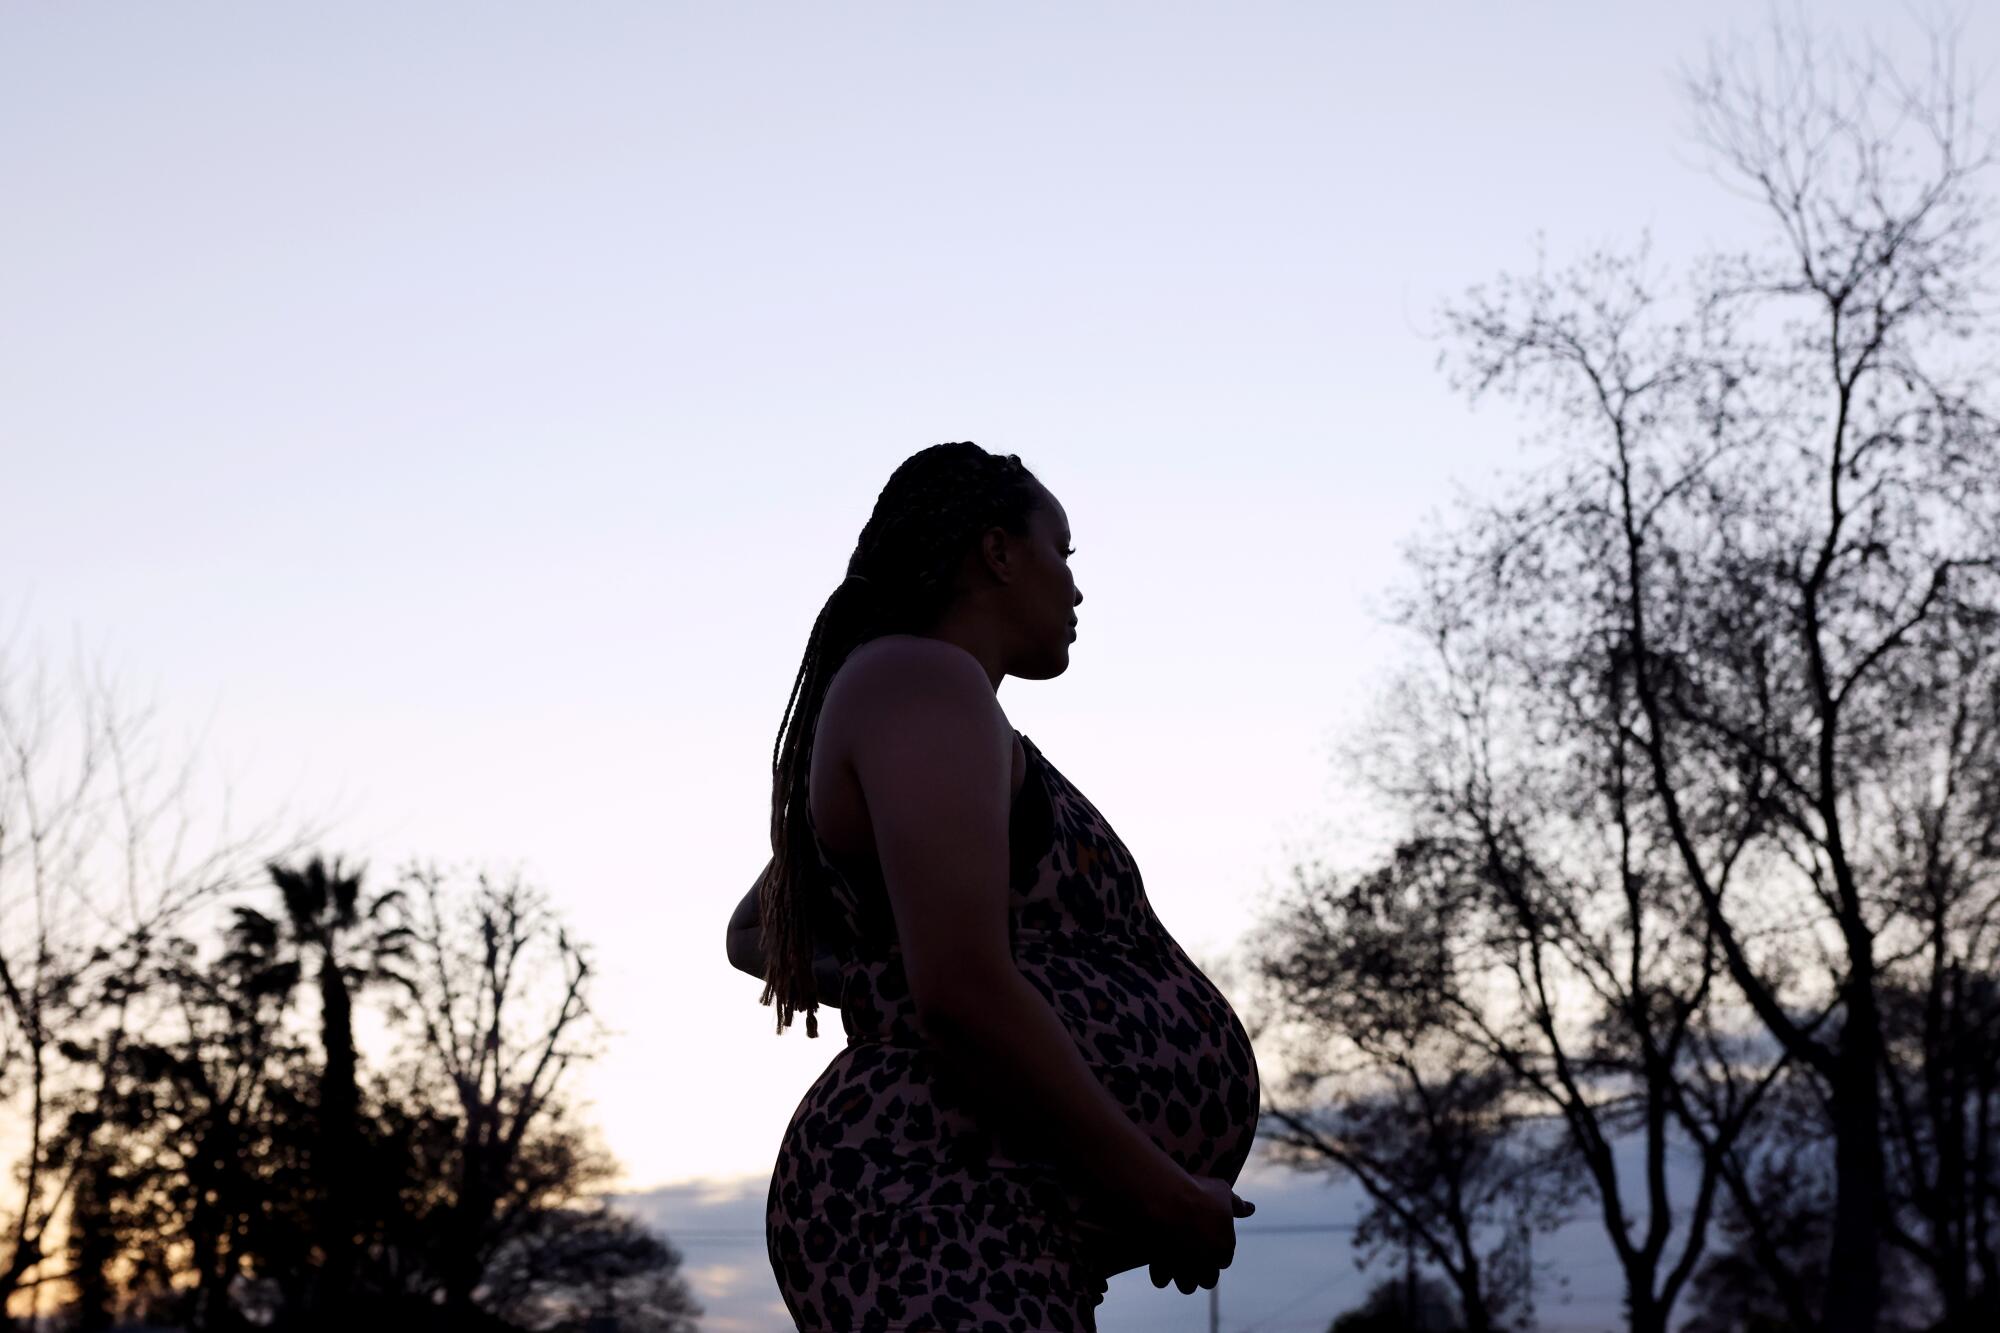 A pregnant woman shown in profile walks near trees.